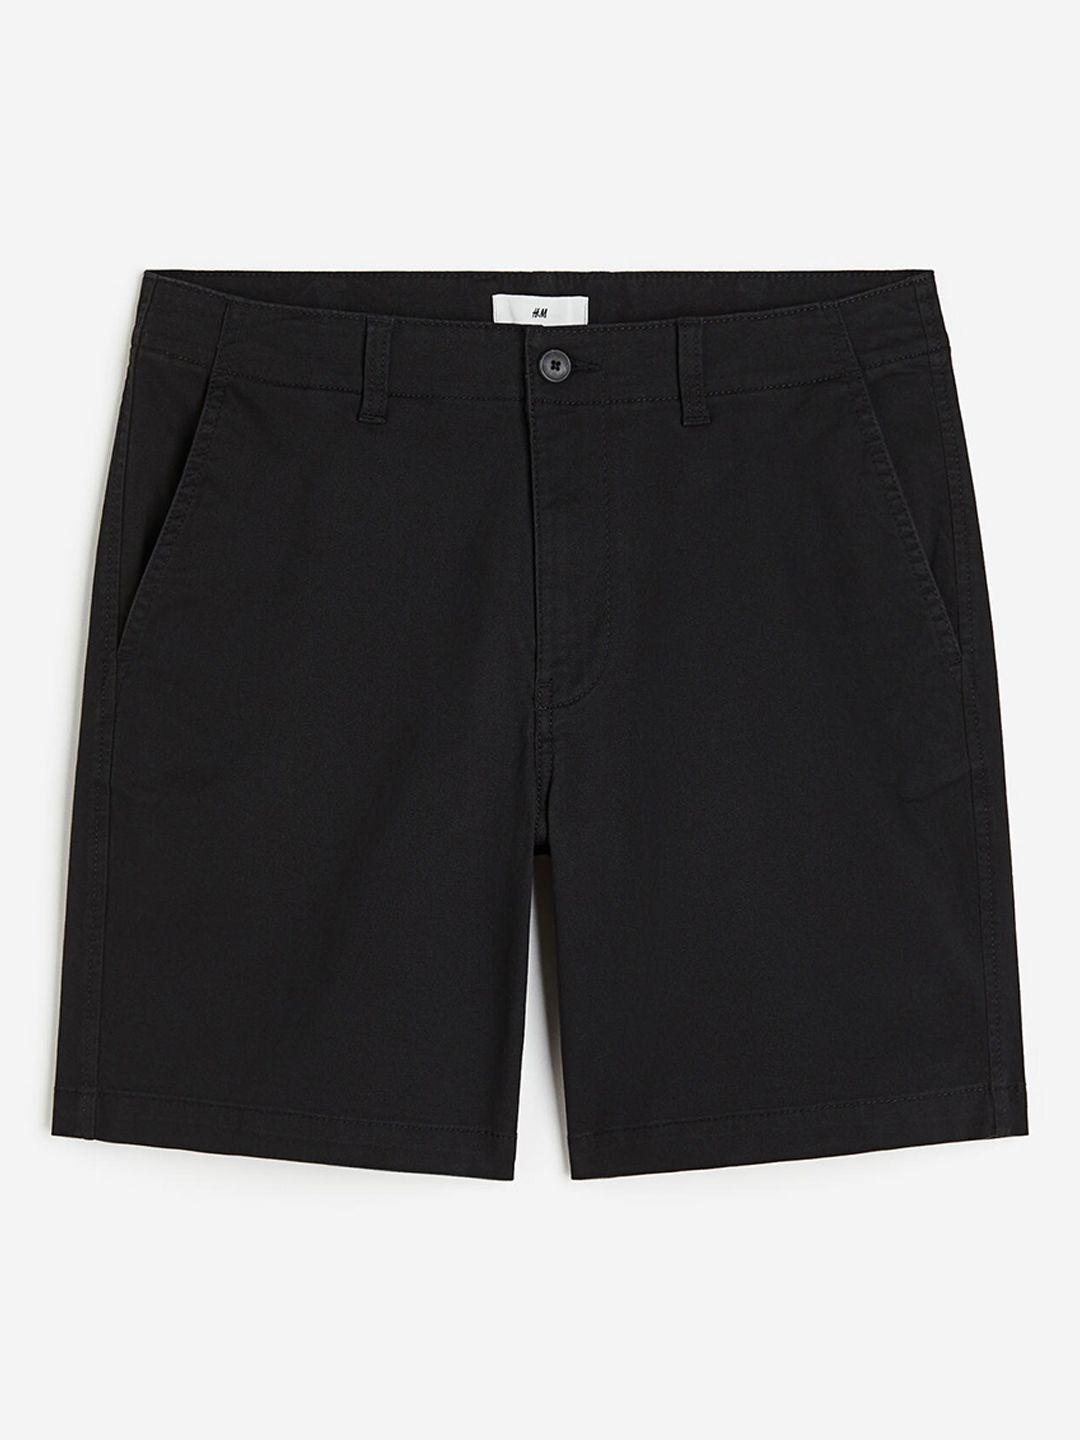 H&M Men Chino Shorts